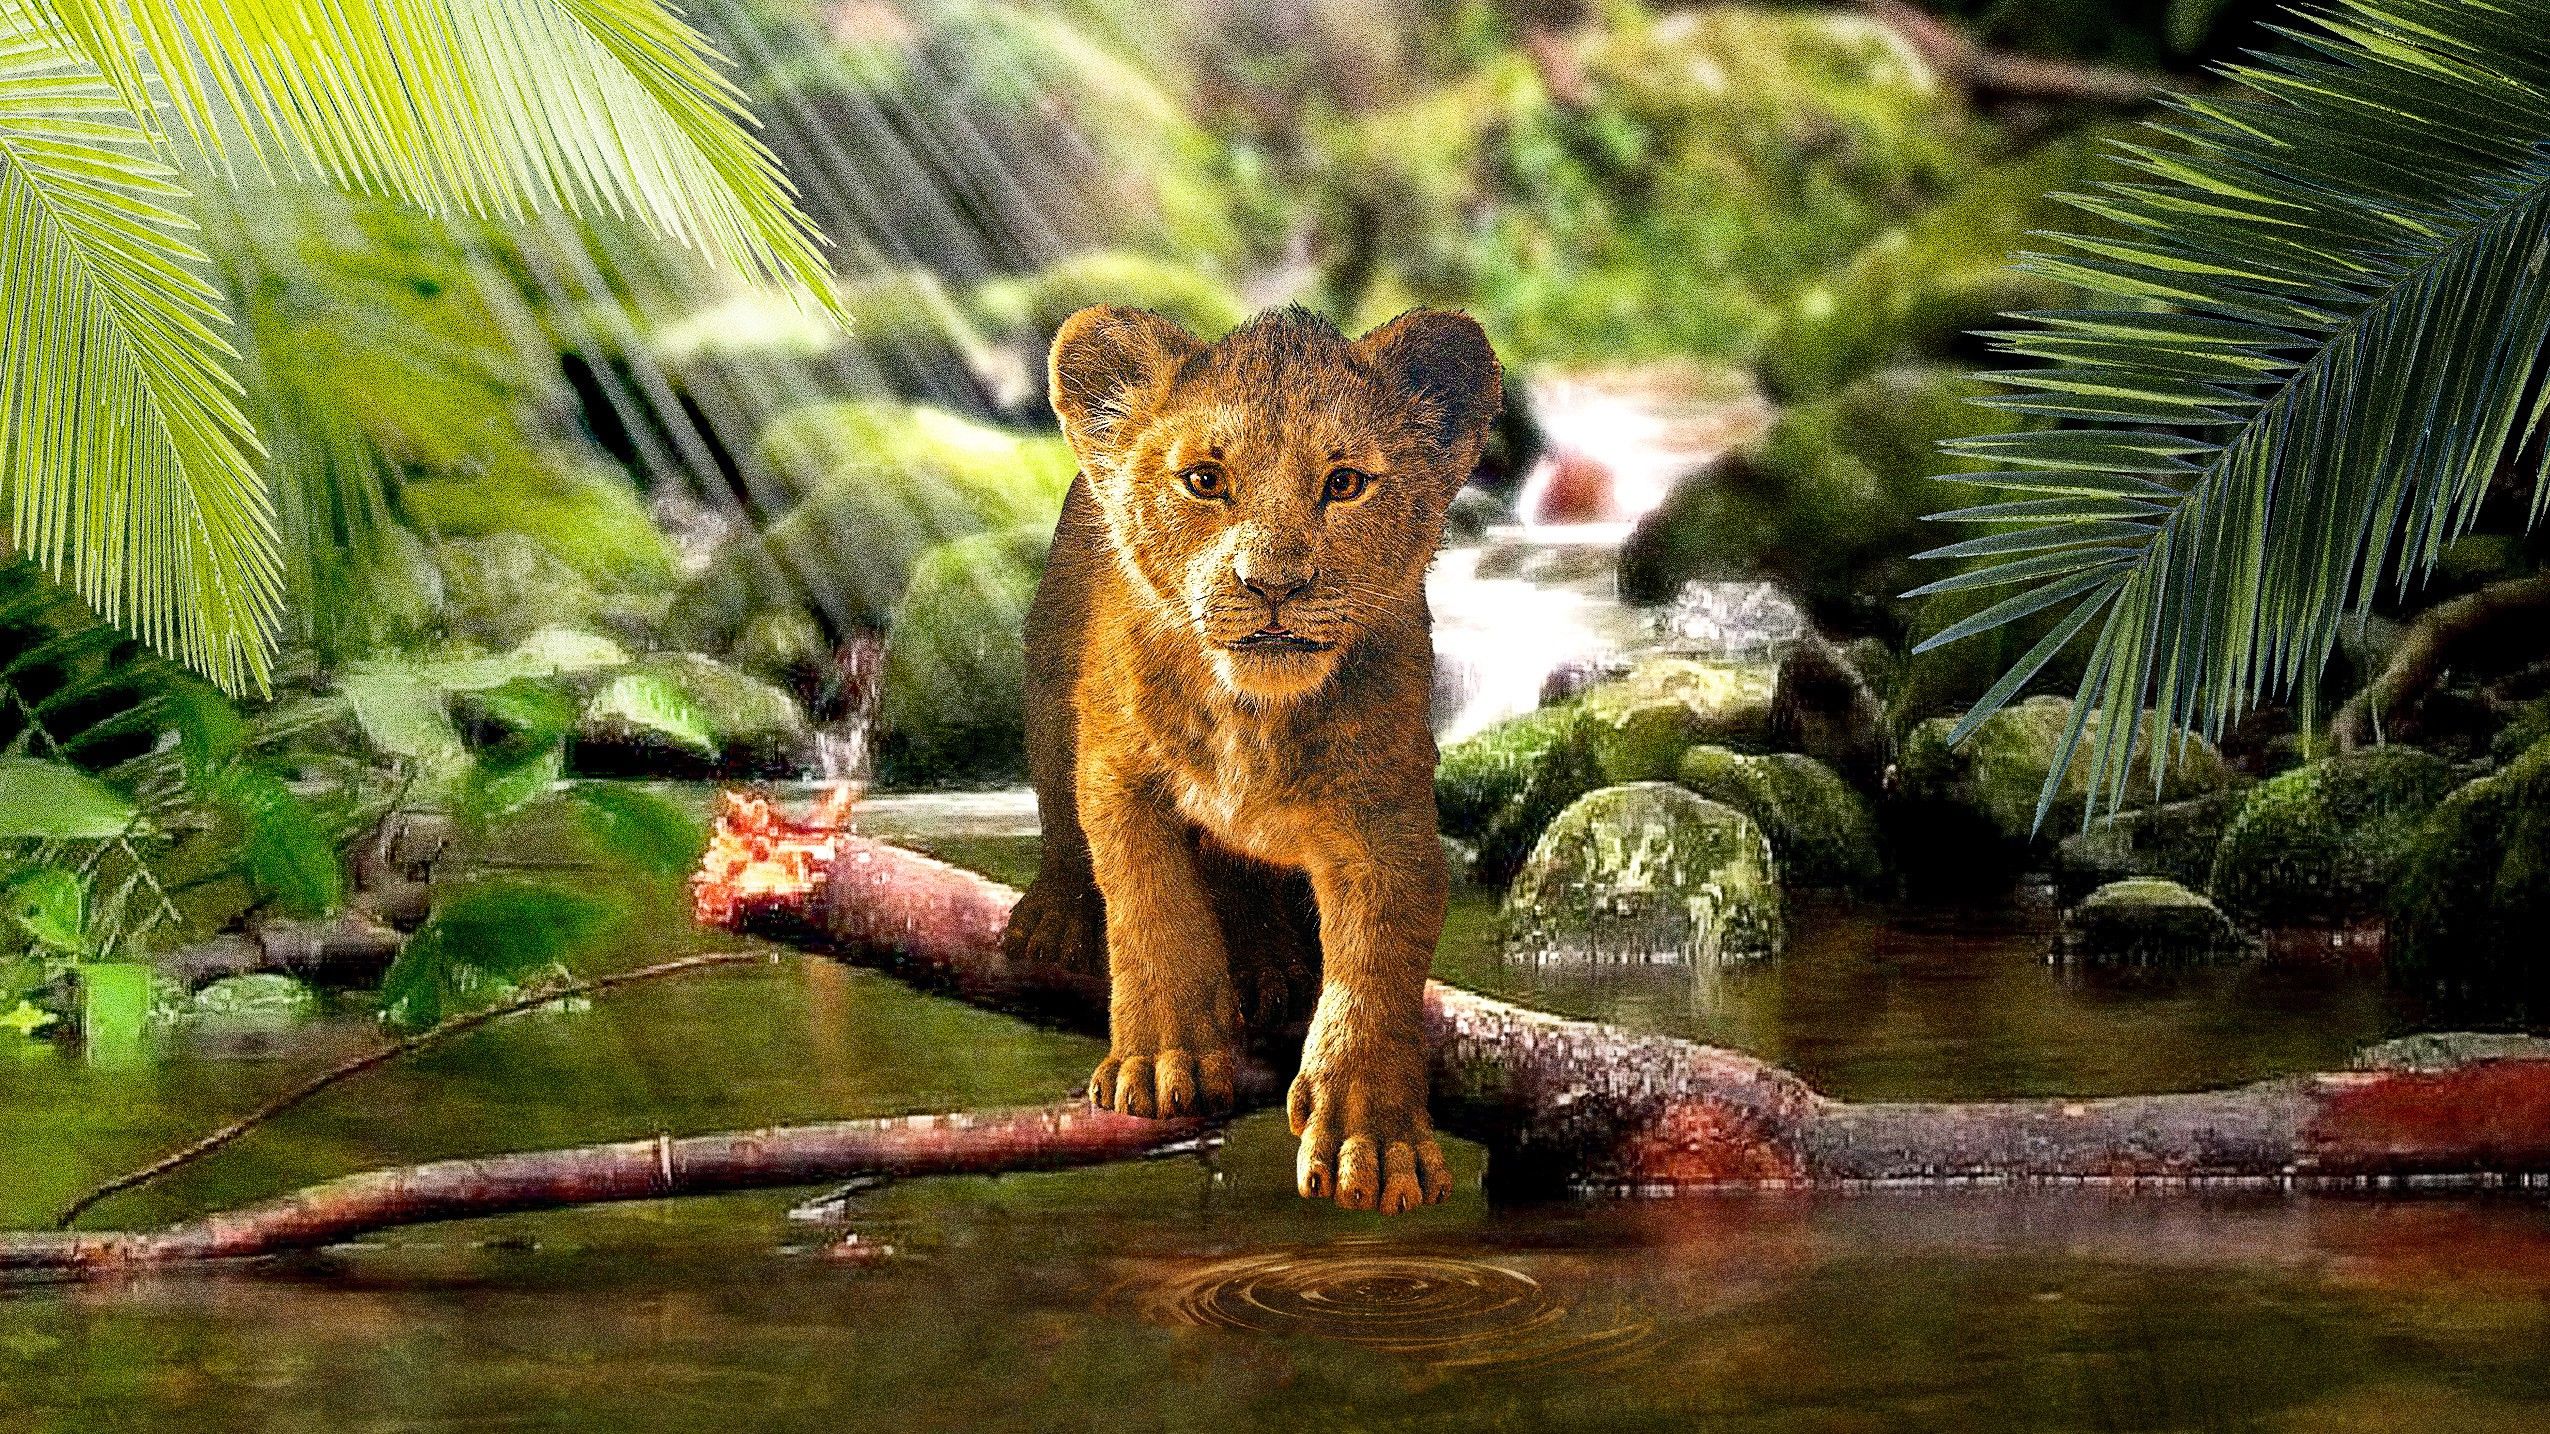 HD wallpaper The Lion King Simba 2019. co